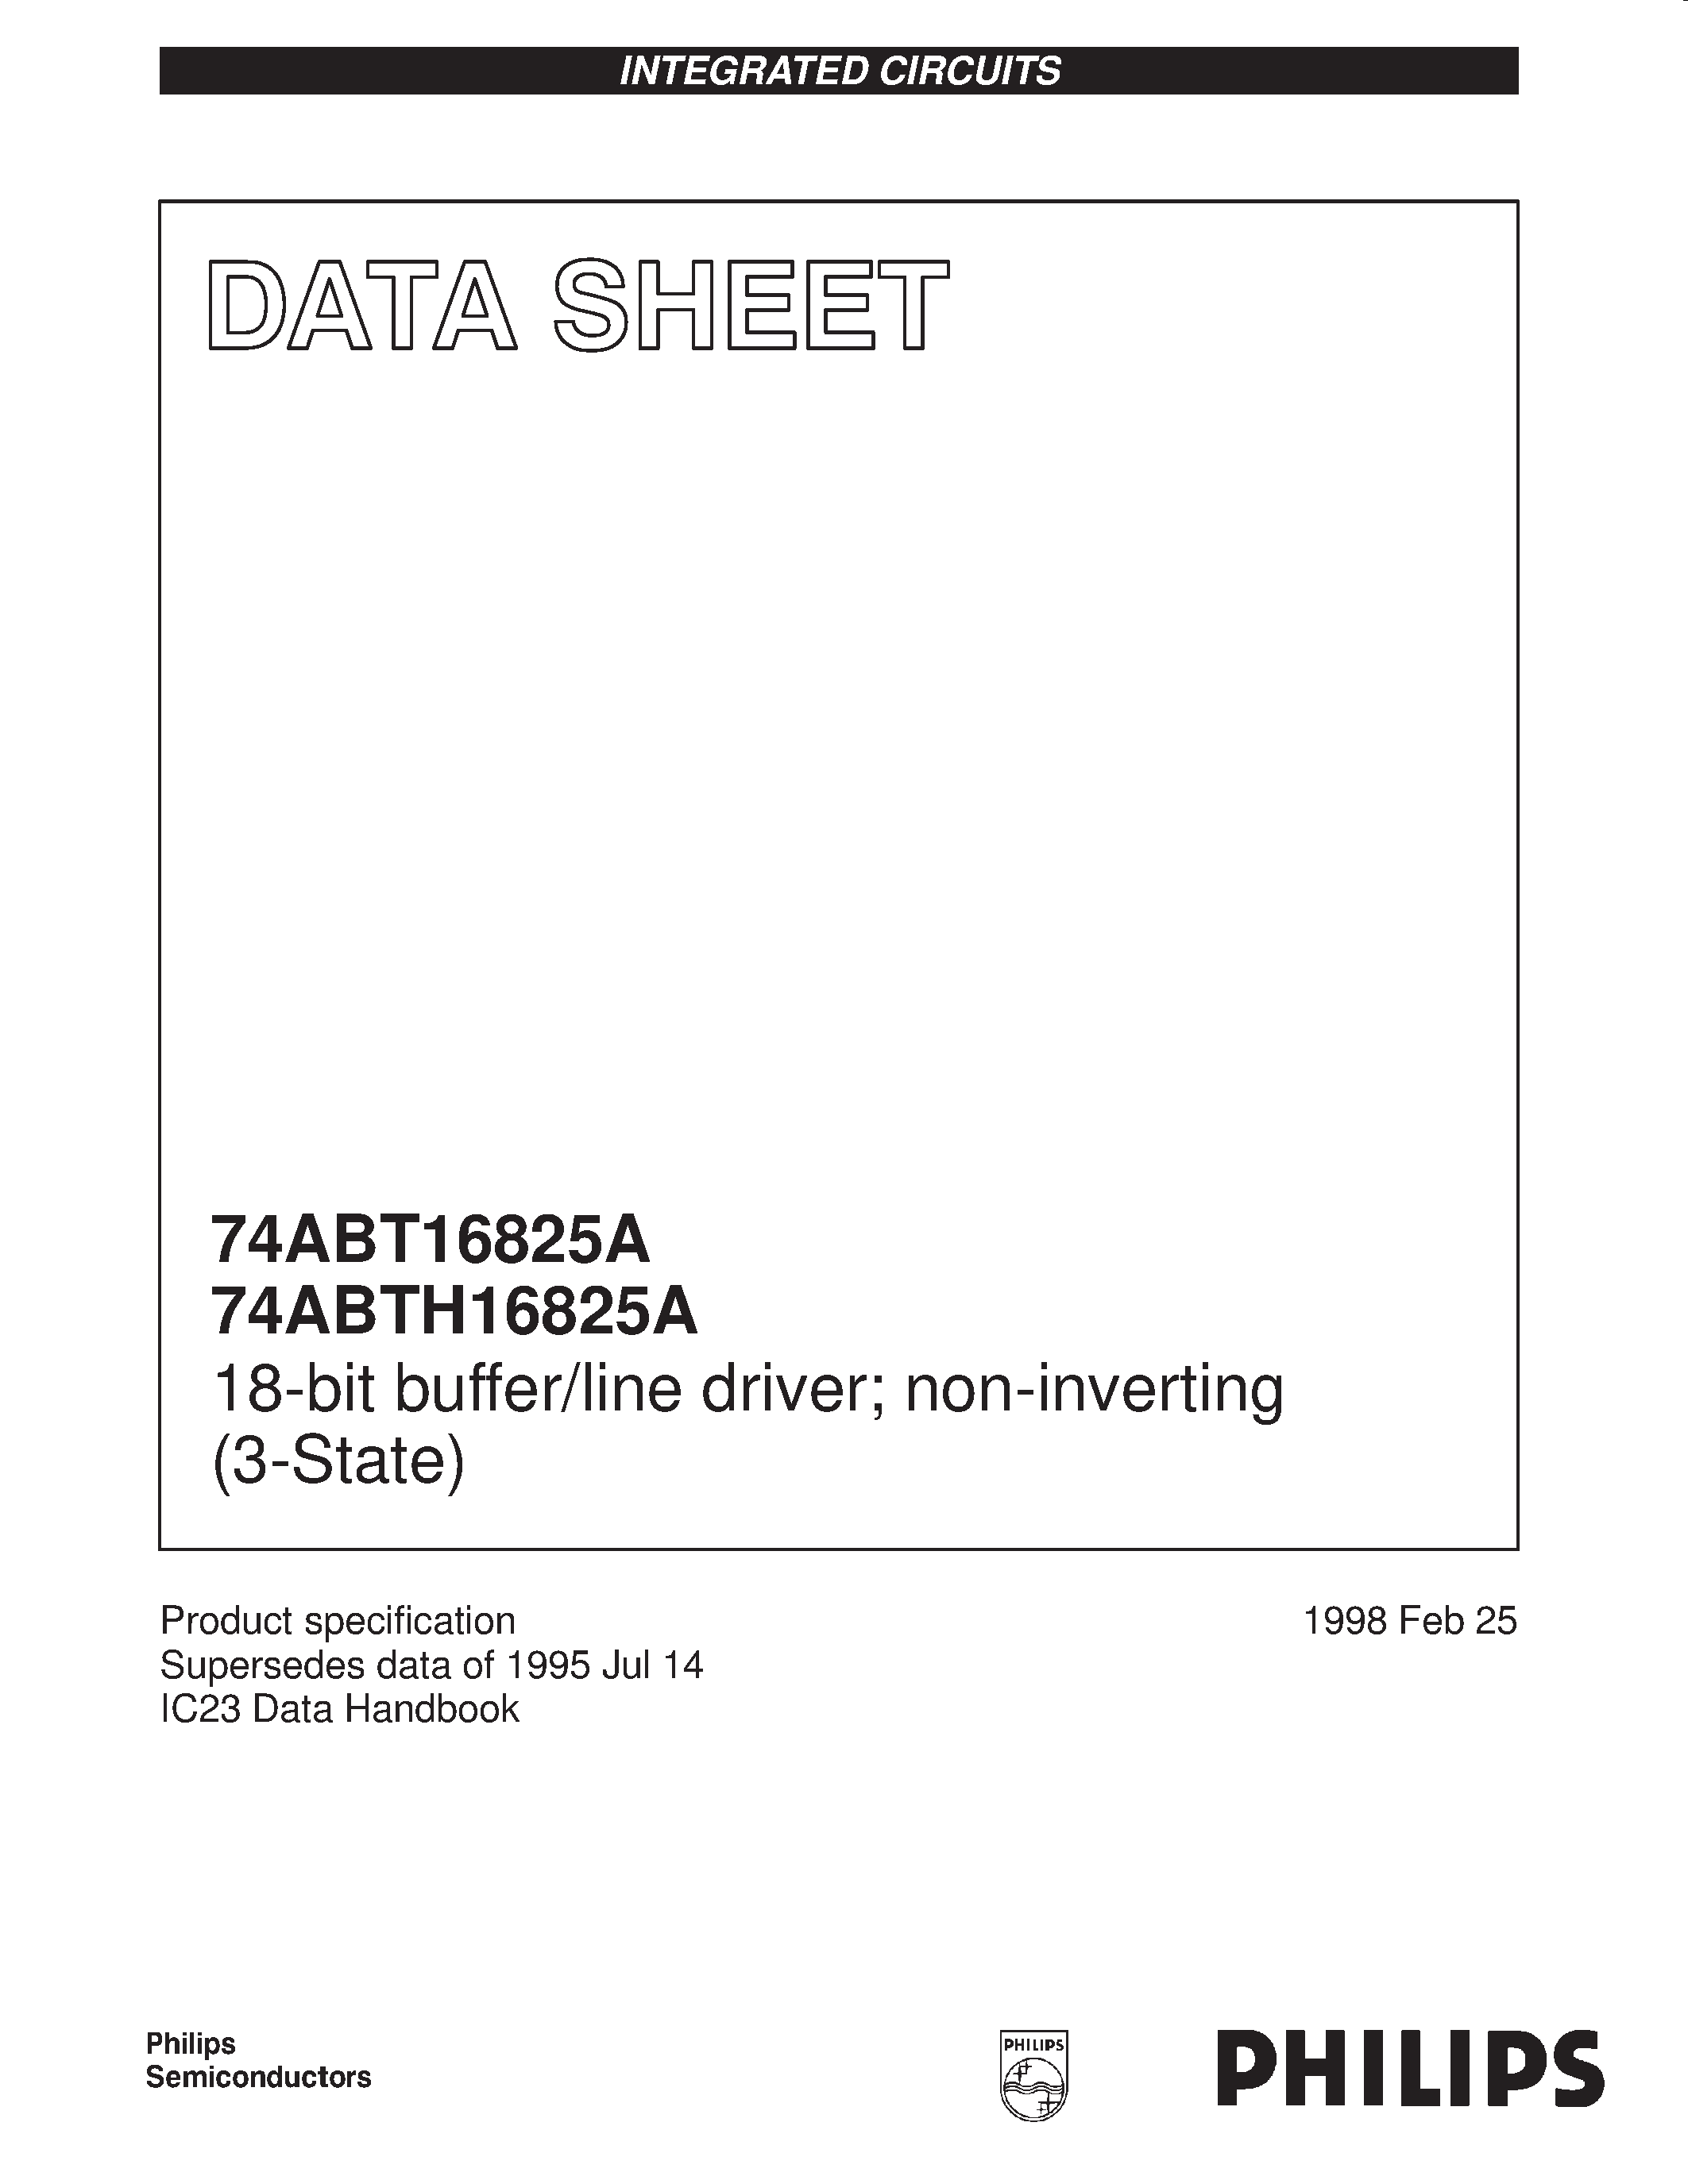 Даташит 74ABTH16825ADGG - 18-bit buffer/line driver; non-inverting 3-State страница 1